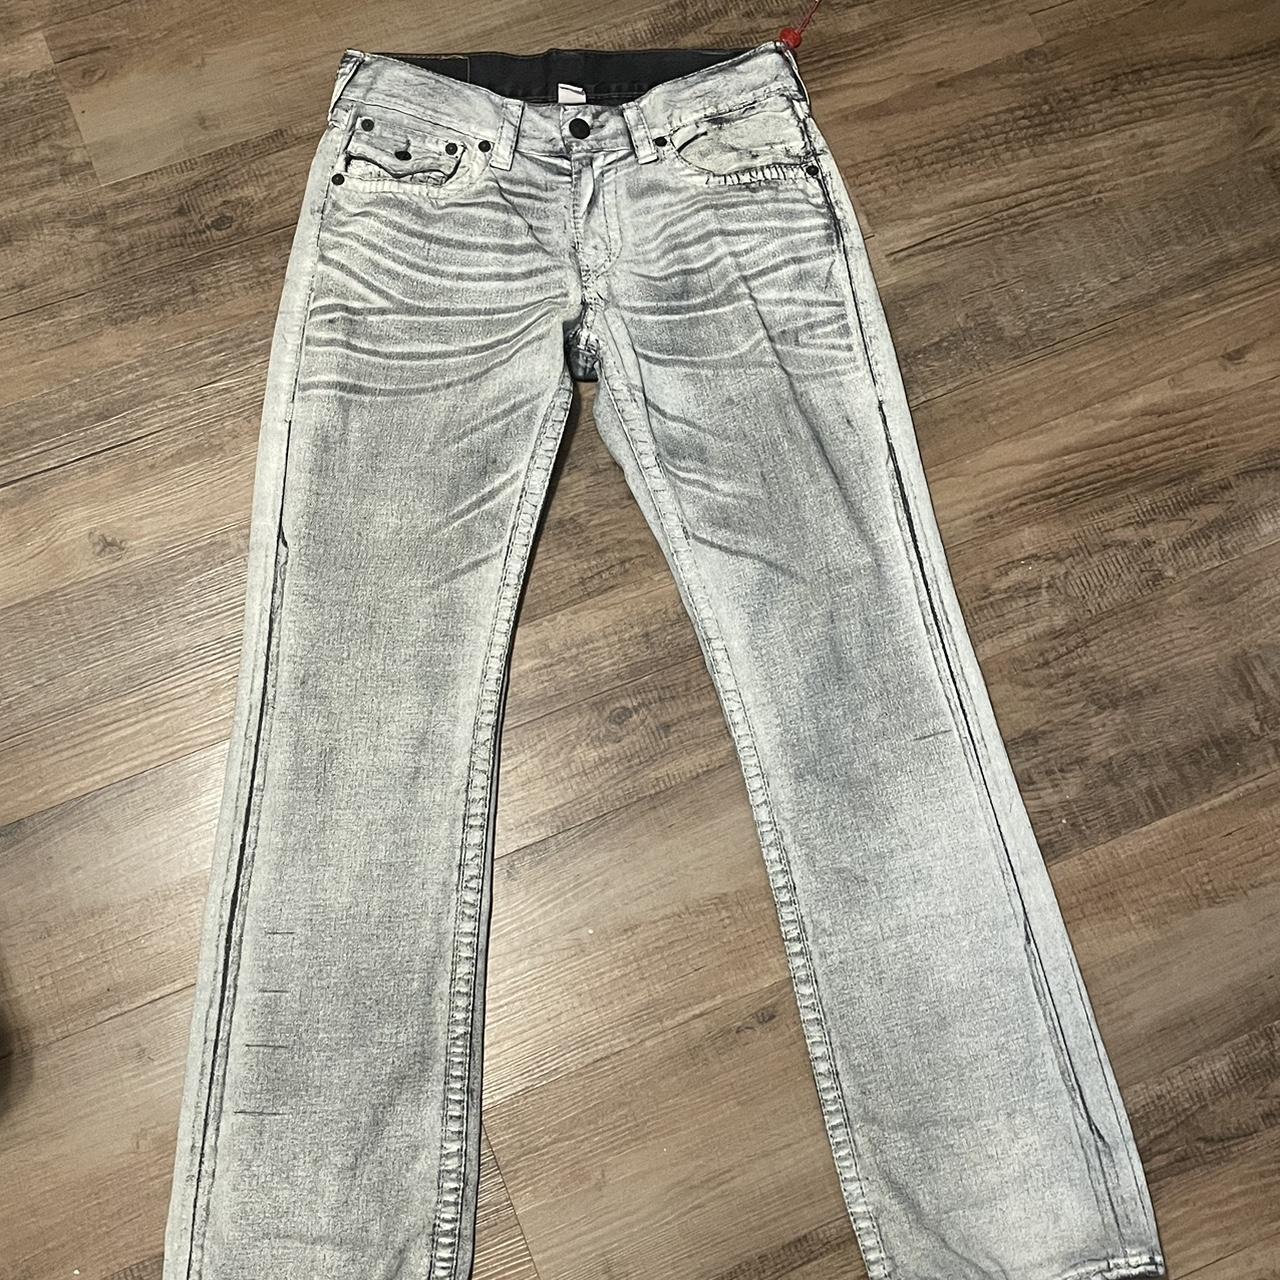 True religion mens jeans very good condition - Depop